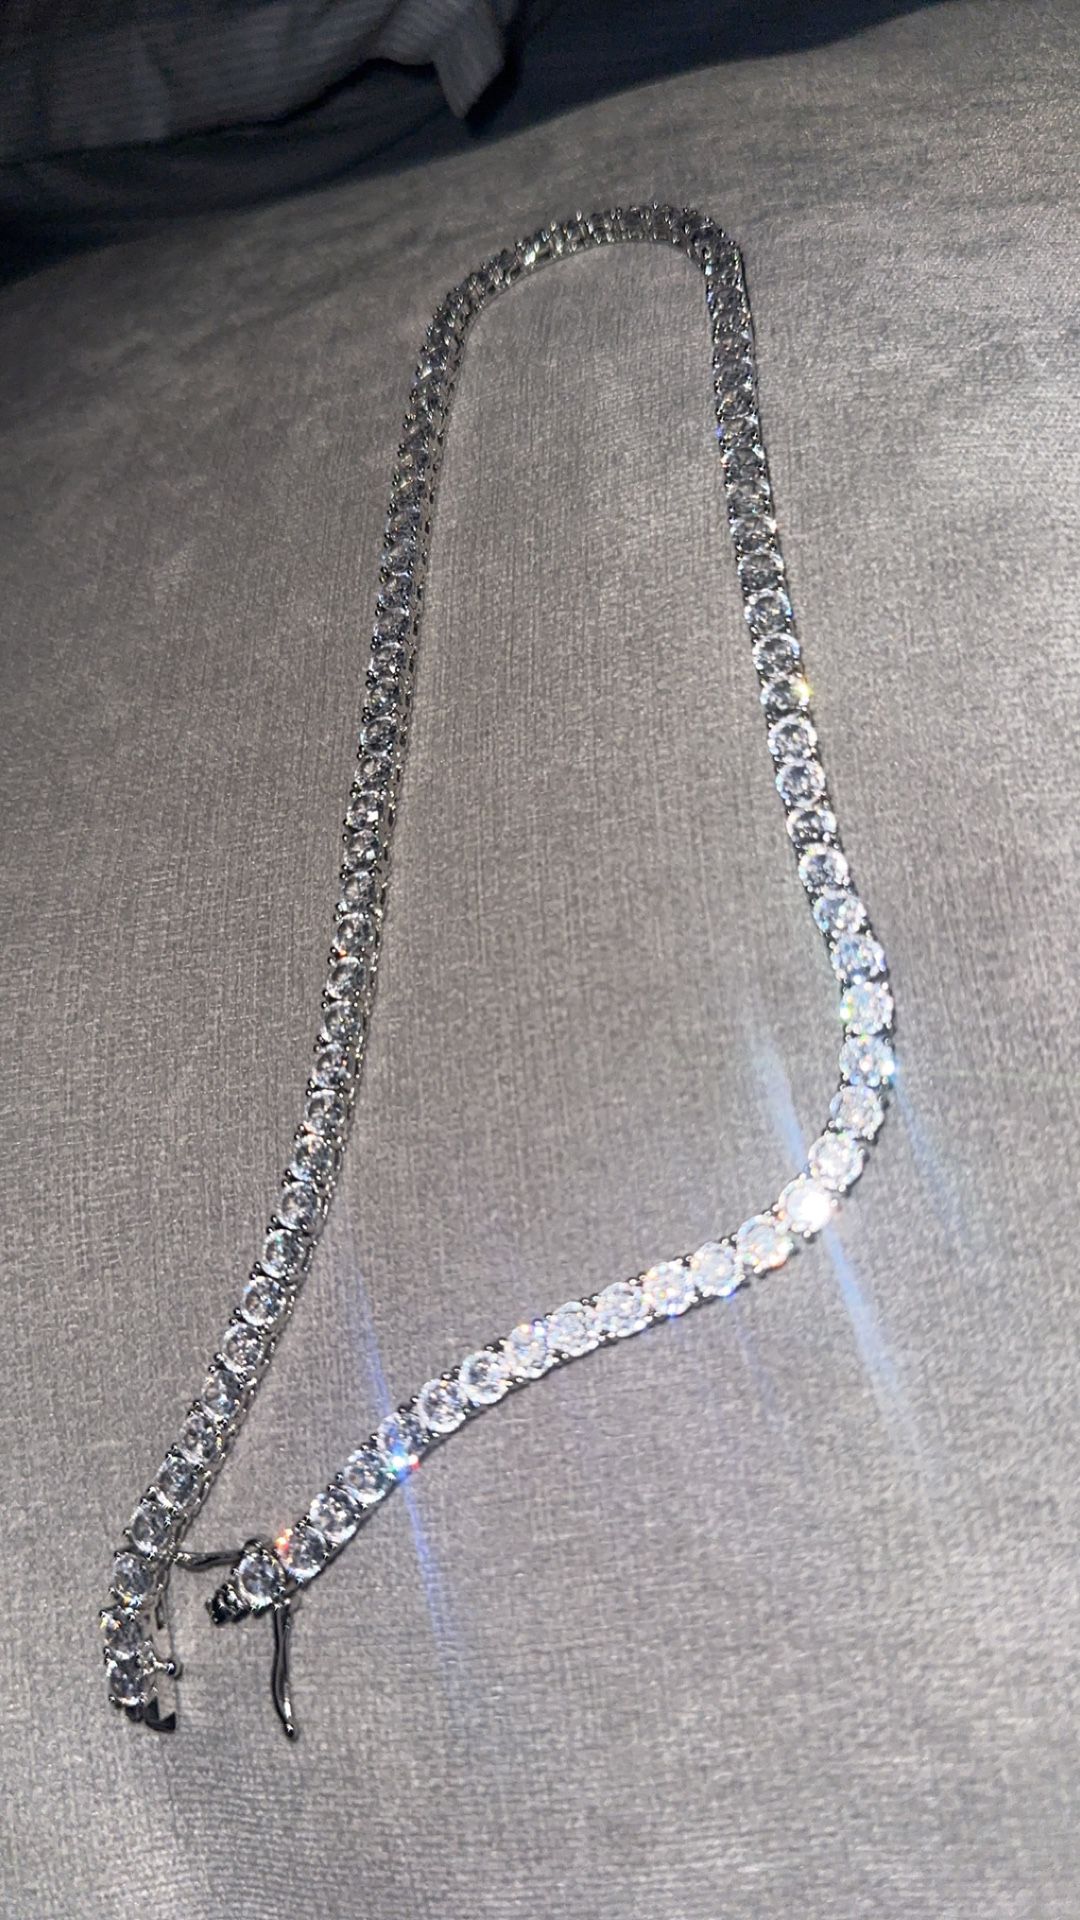 VVS Moissanite Diamond Chain 16cm 